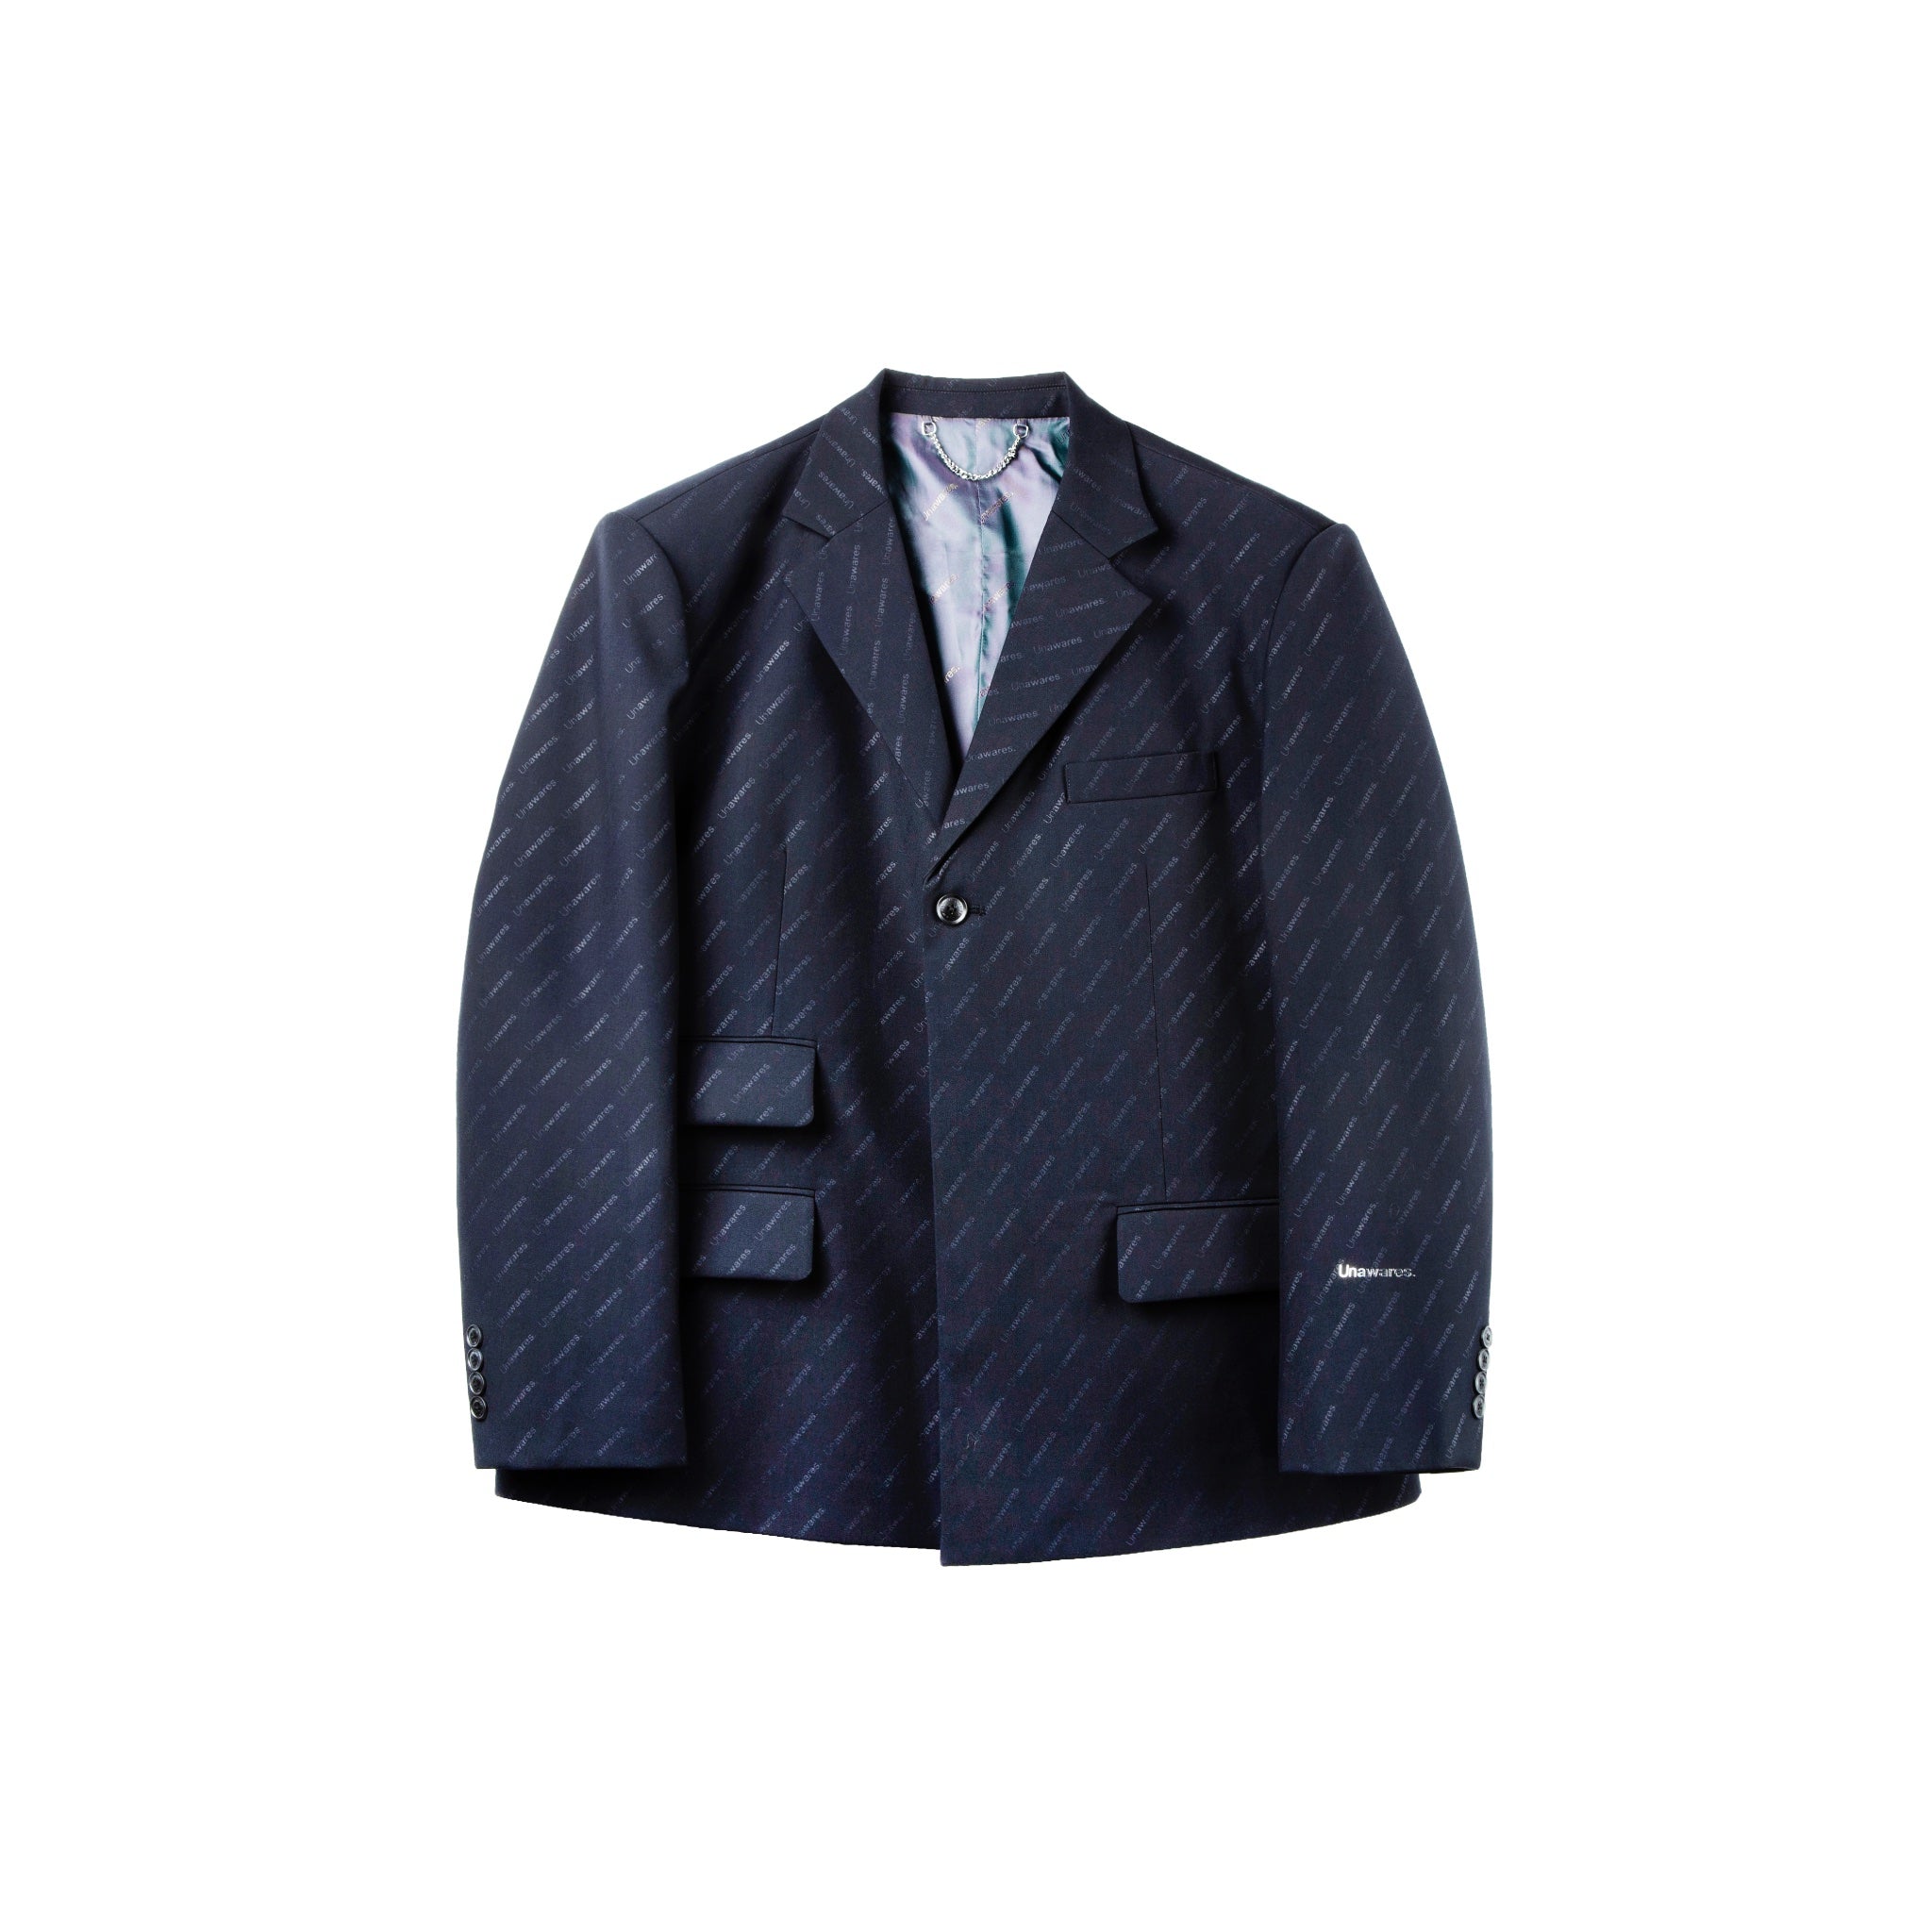 UNAWARES Brand Monogram Single Breasted Suit